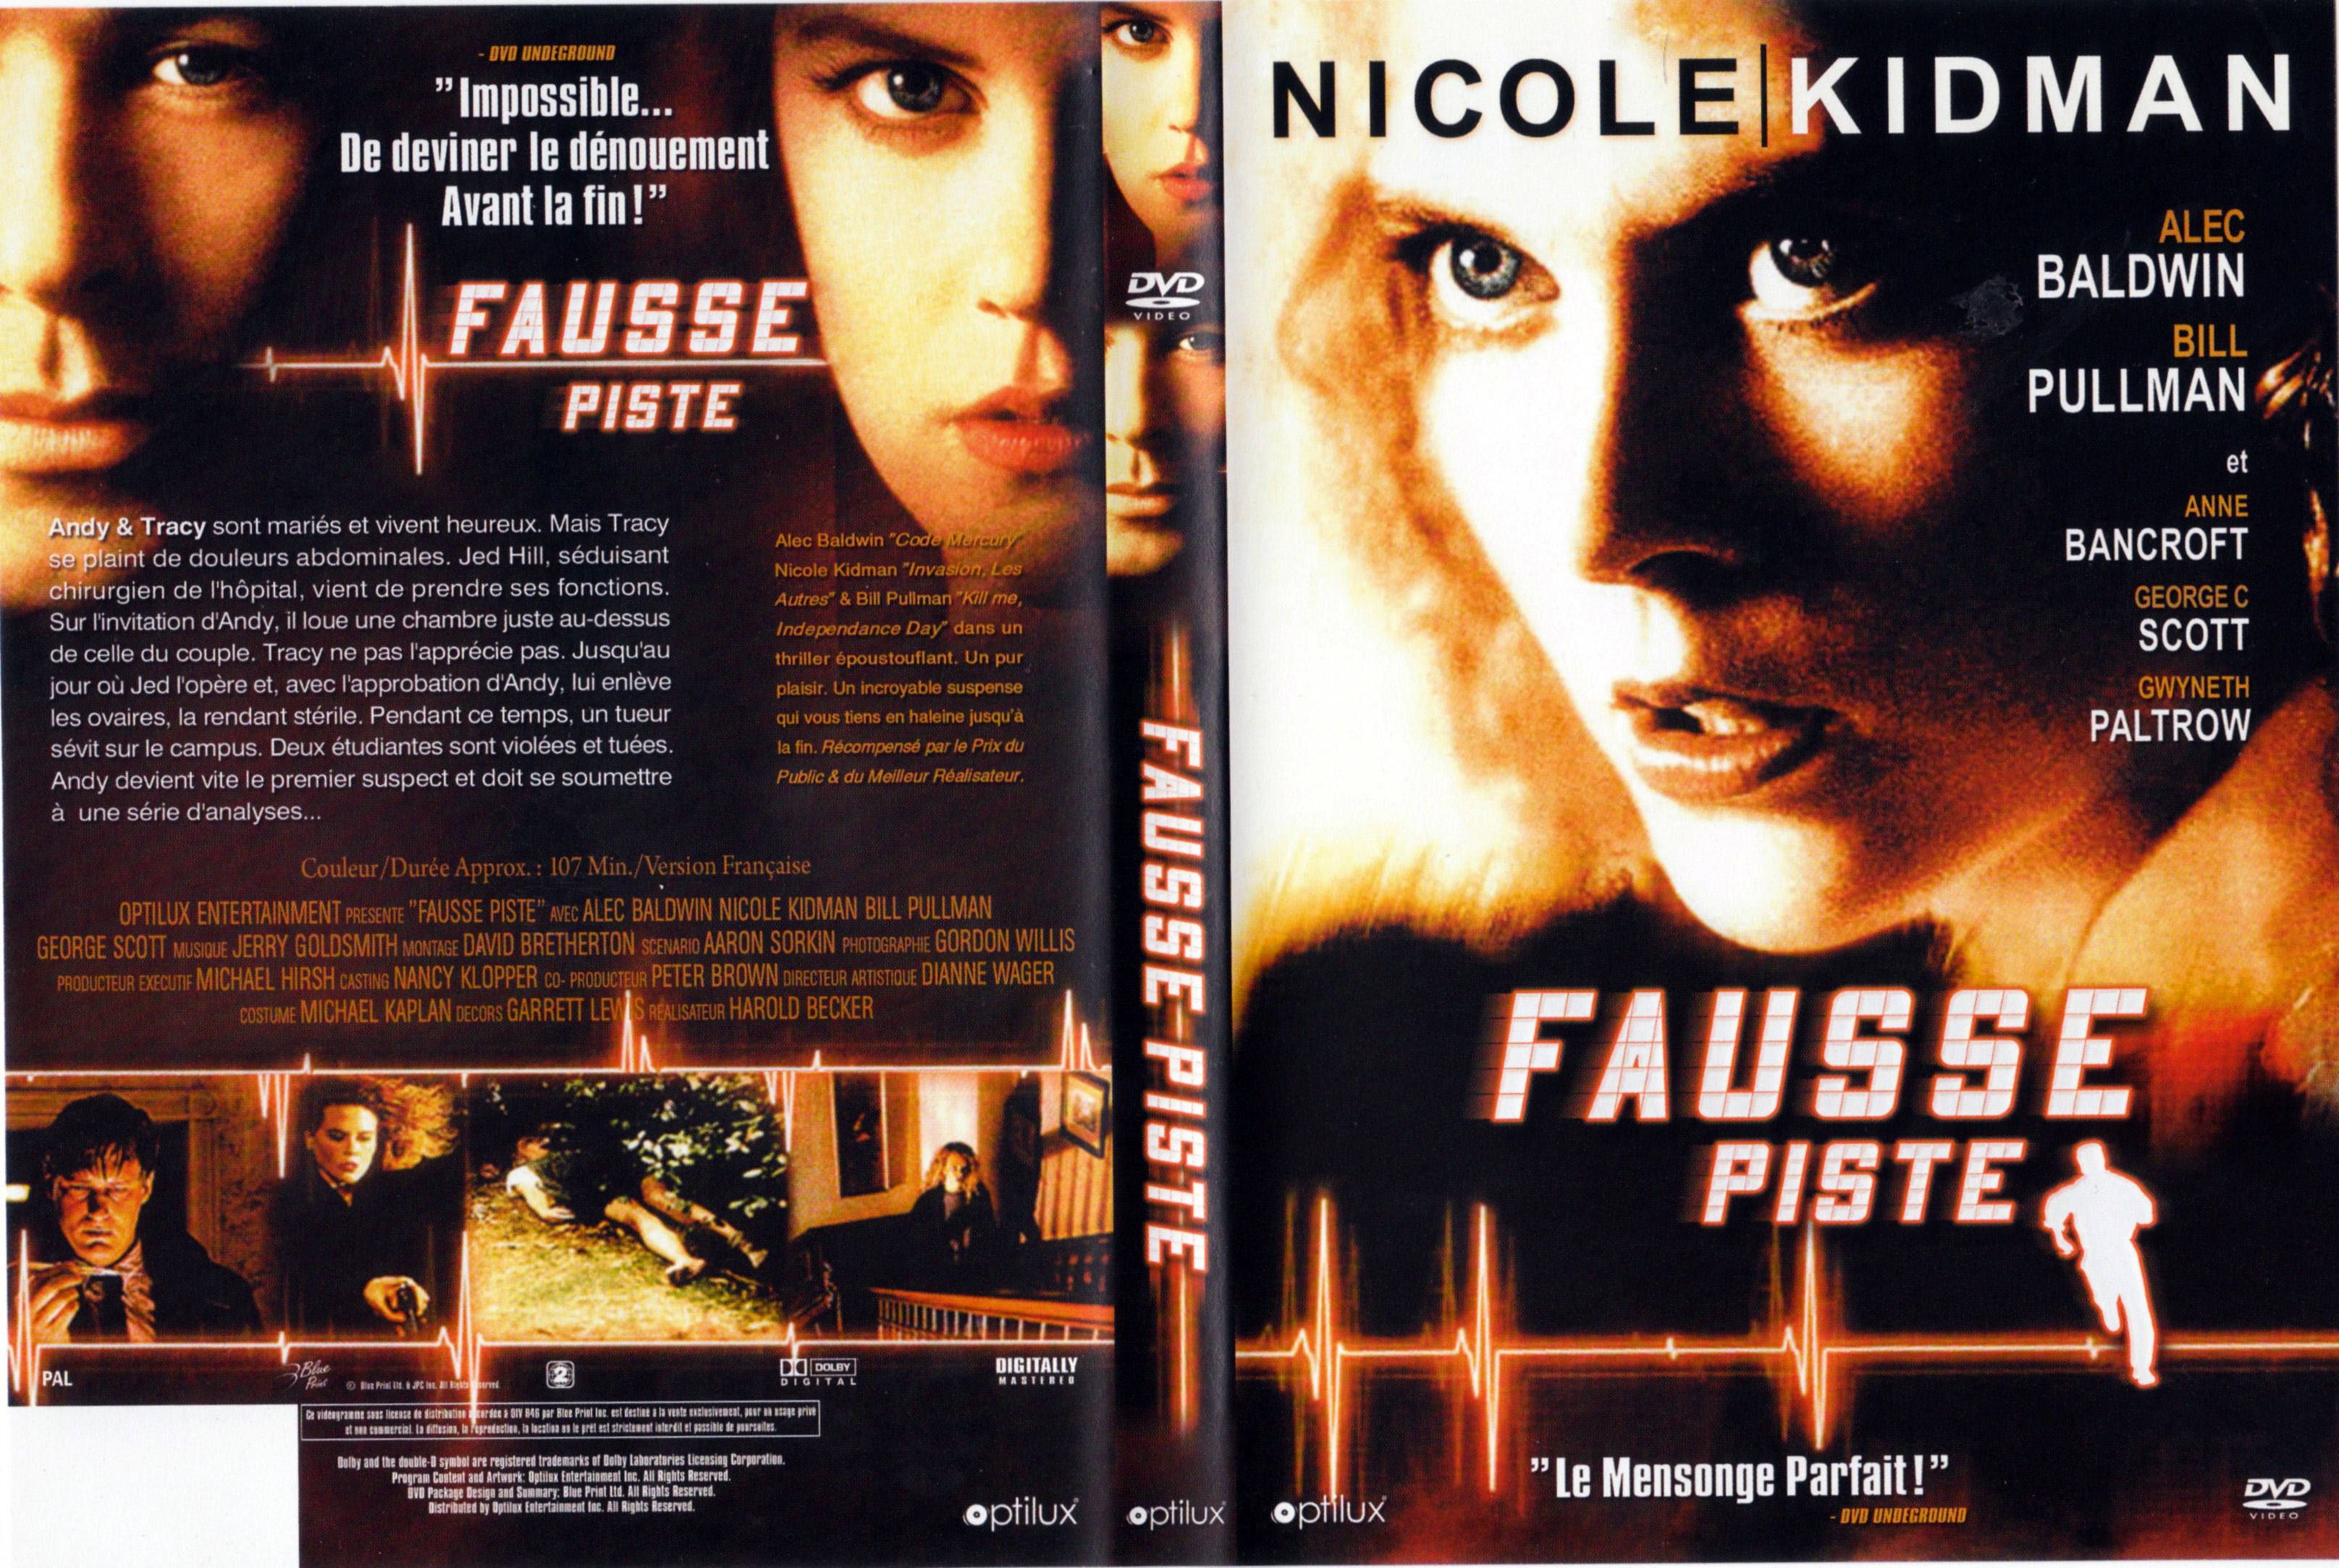 Jaquette DVD Fausse piste (Nicole Kidman)